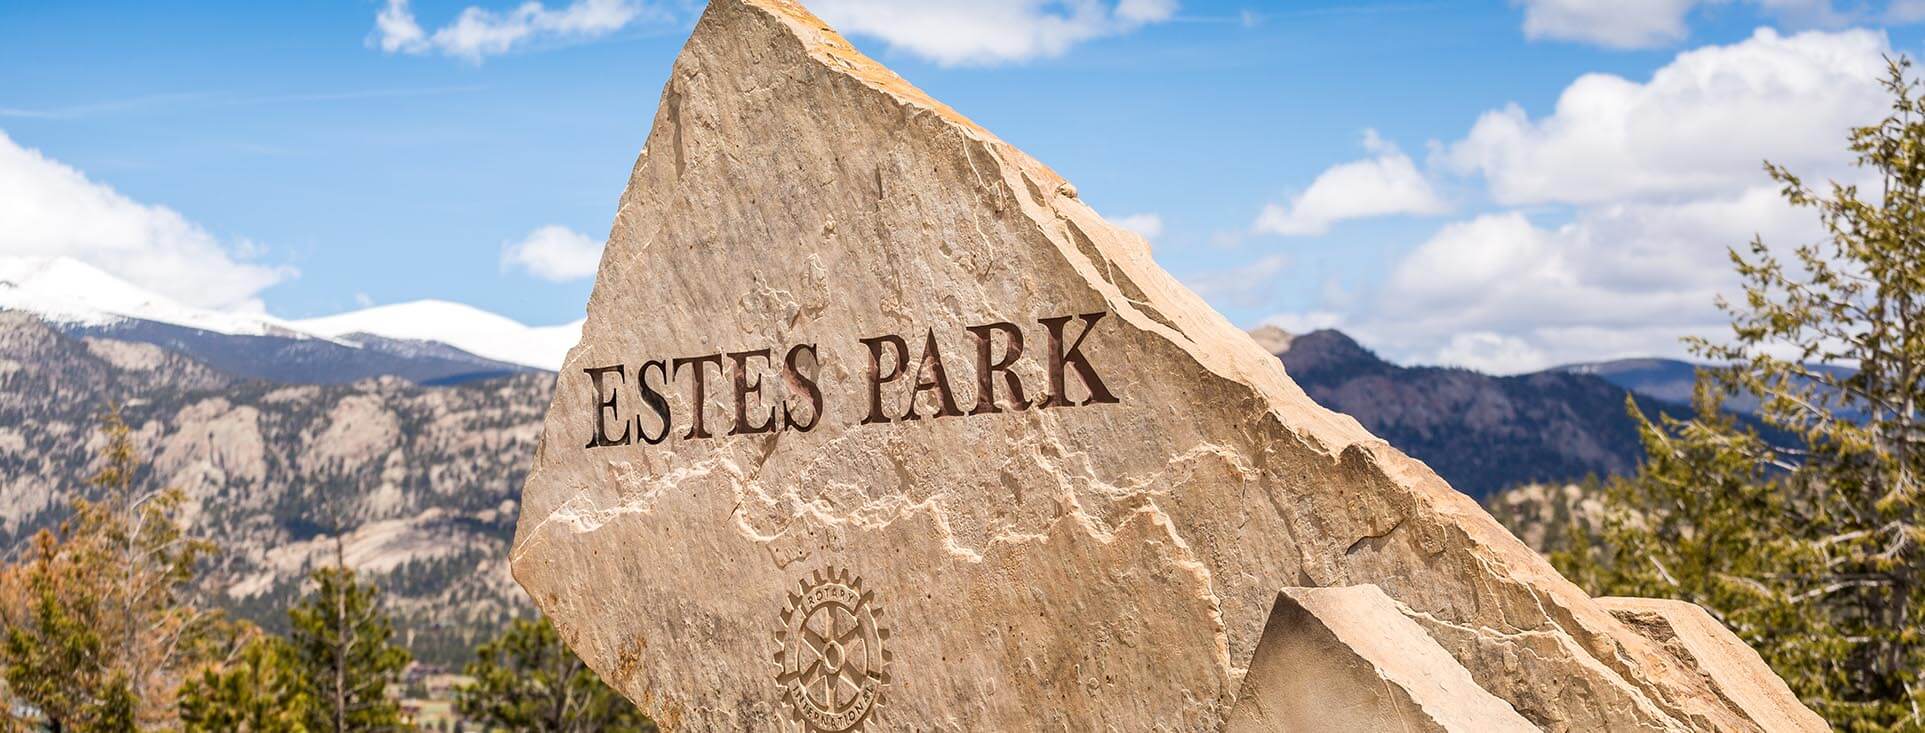 Estes park sign. text: Estes Park.